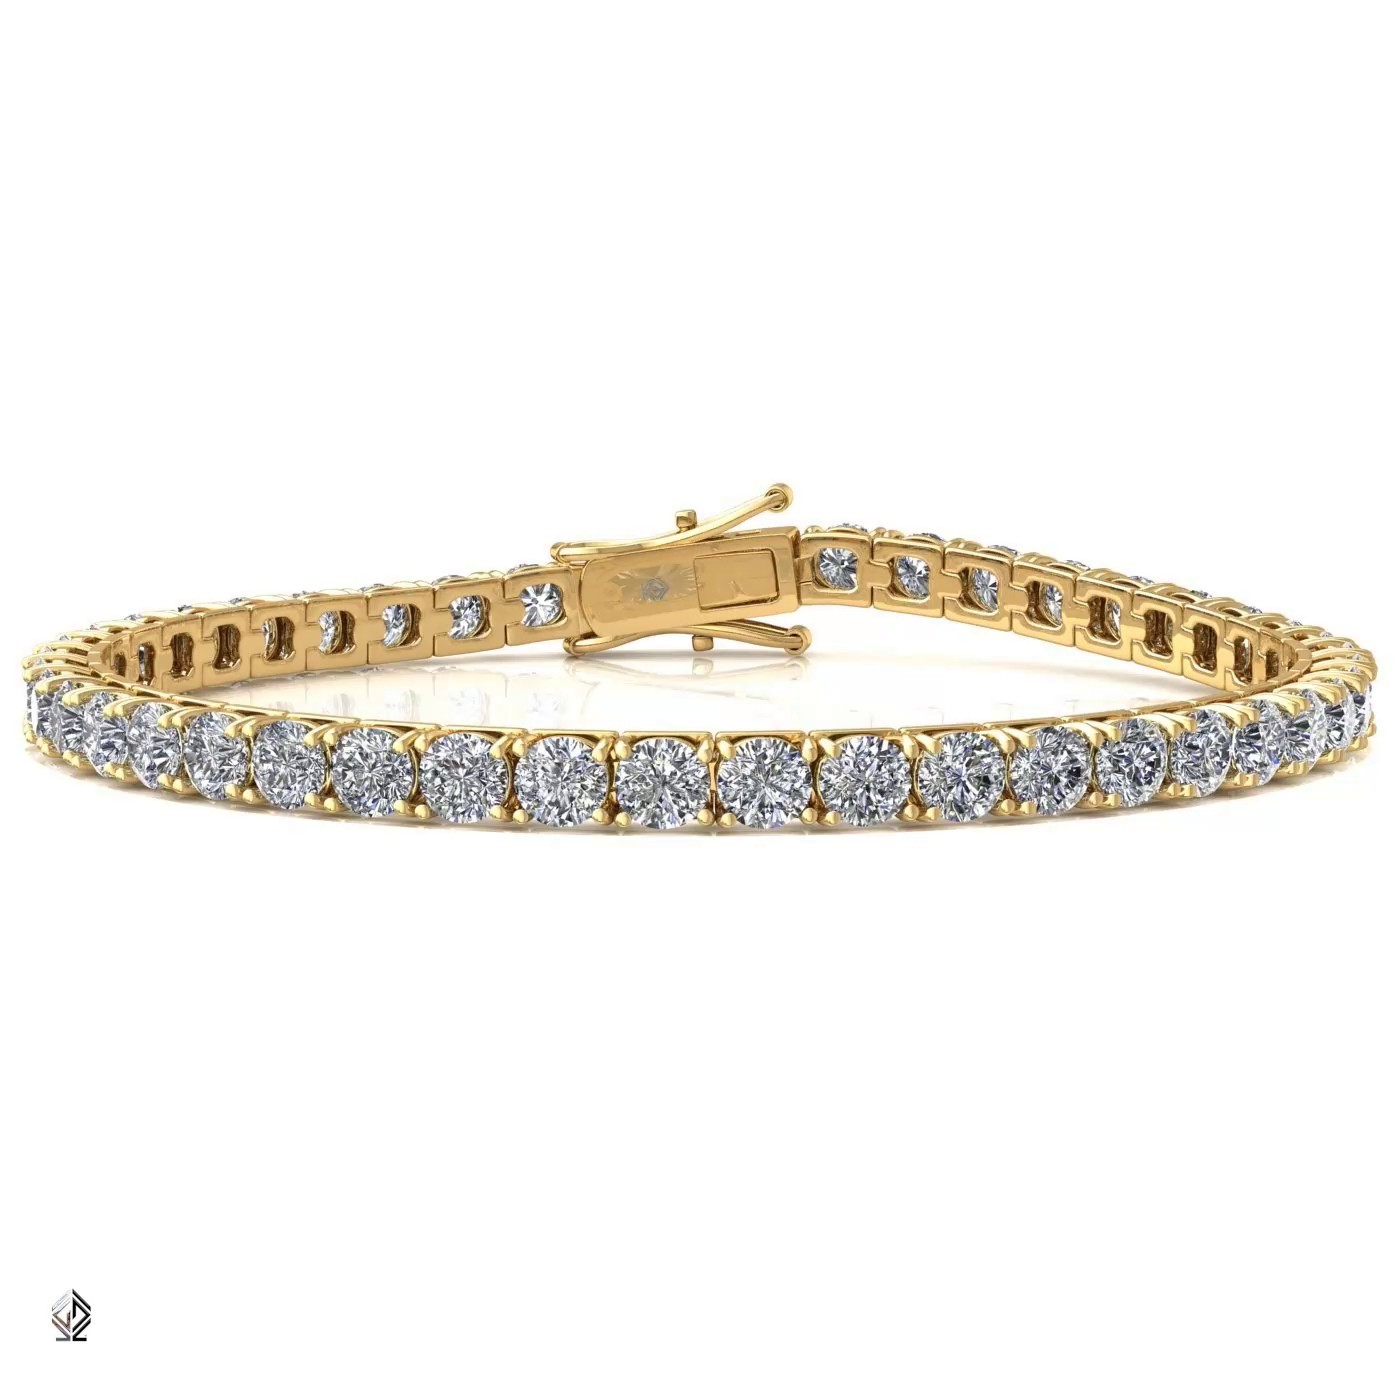 18k white gold 3.3mm 4 prong round shape diamond tennis bracelet in square setting Photos & images